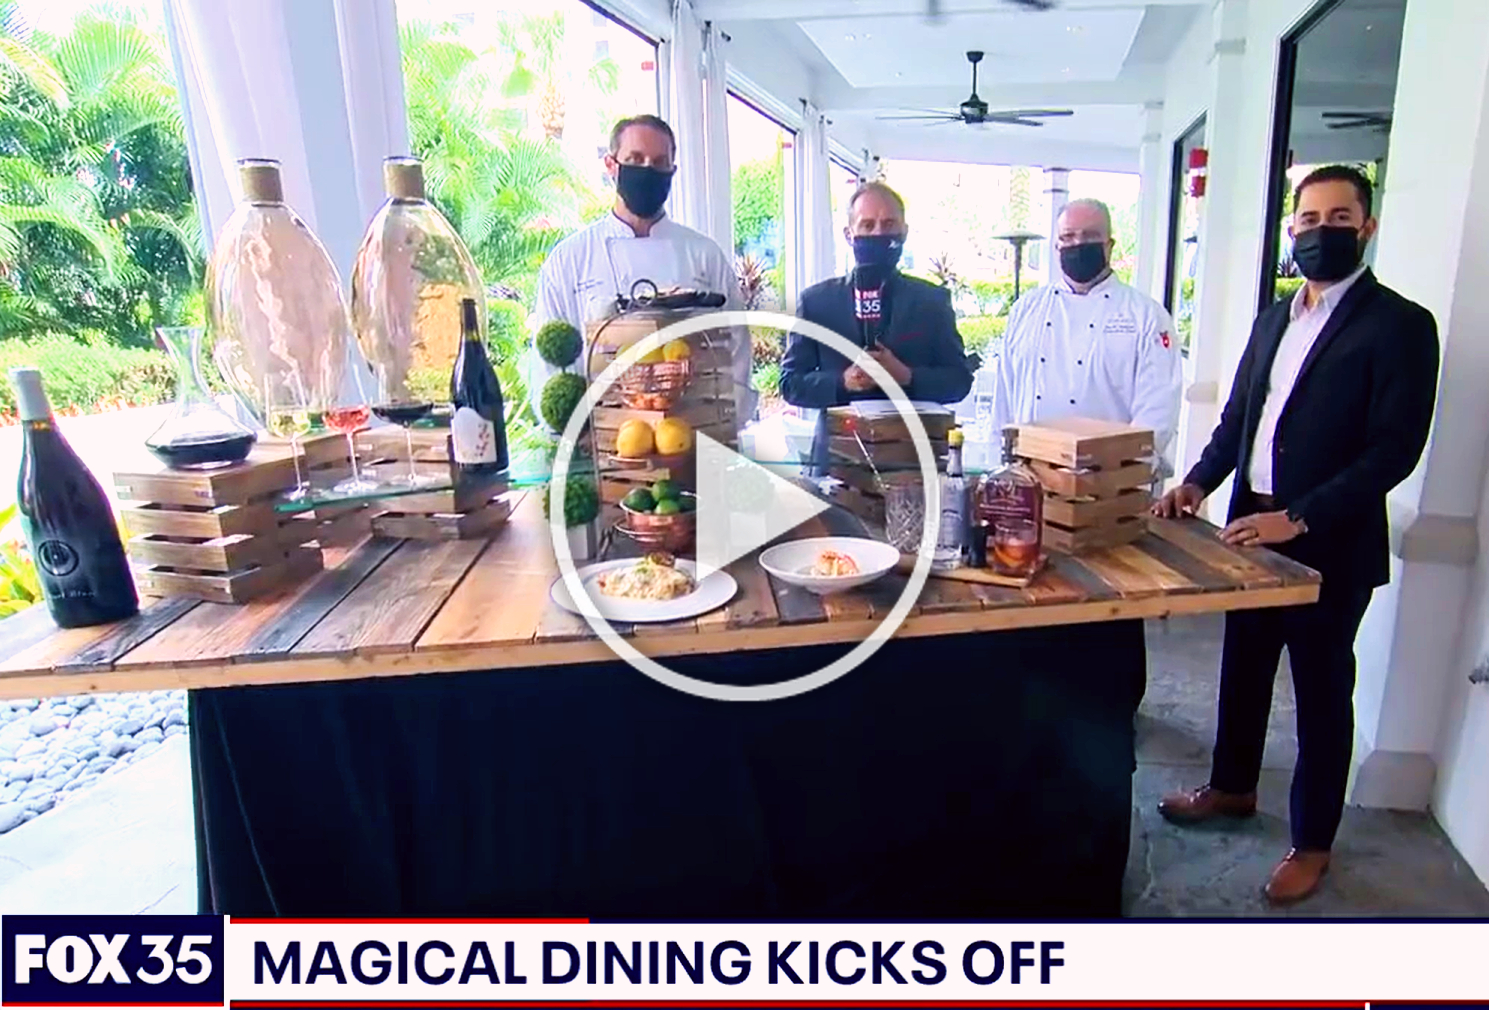  This segment on FOX35 showcases Visit Orlando's Magical Dining